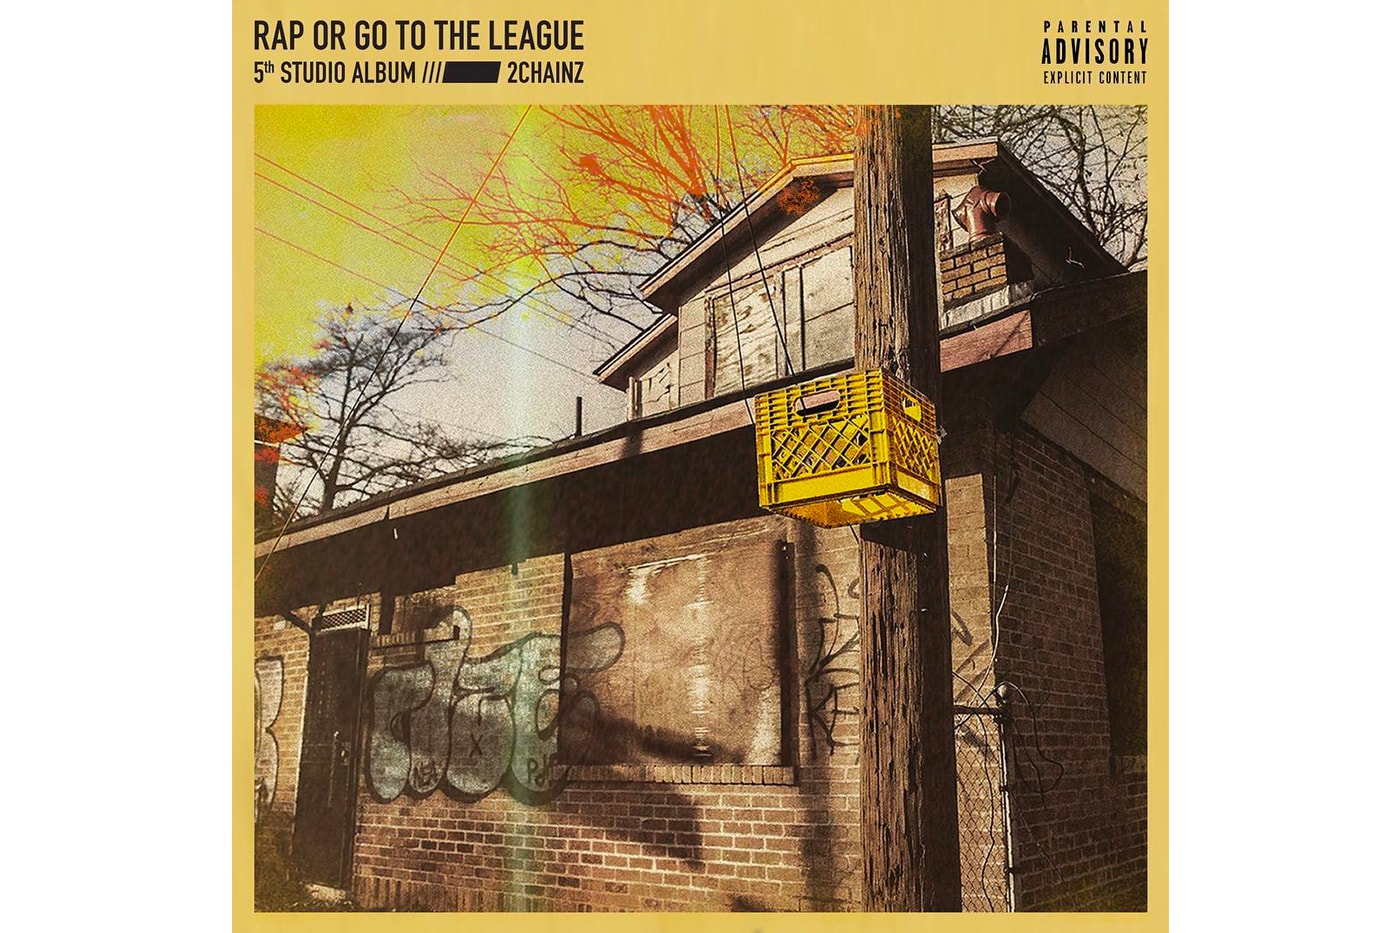 2 Chainz 'Rap or Go to the League' Album Cover cover art lebron james